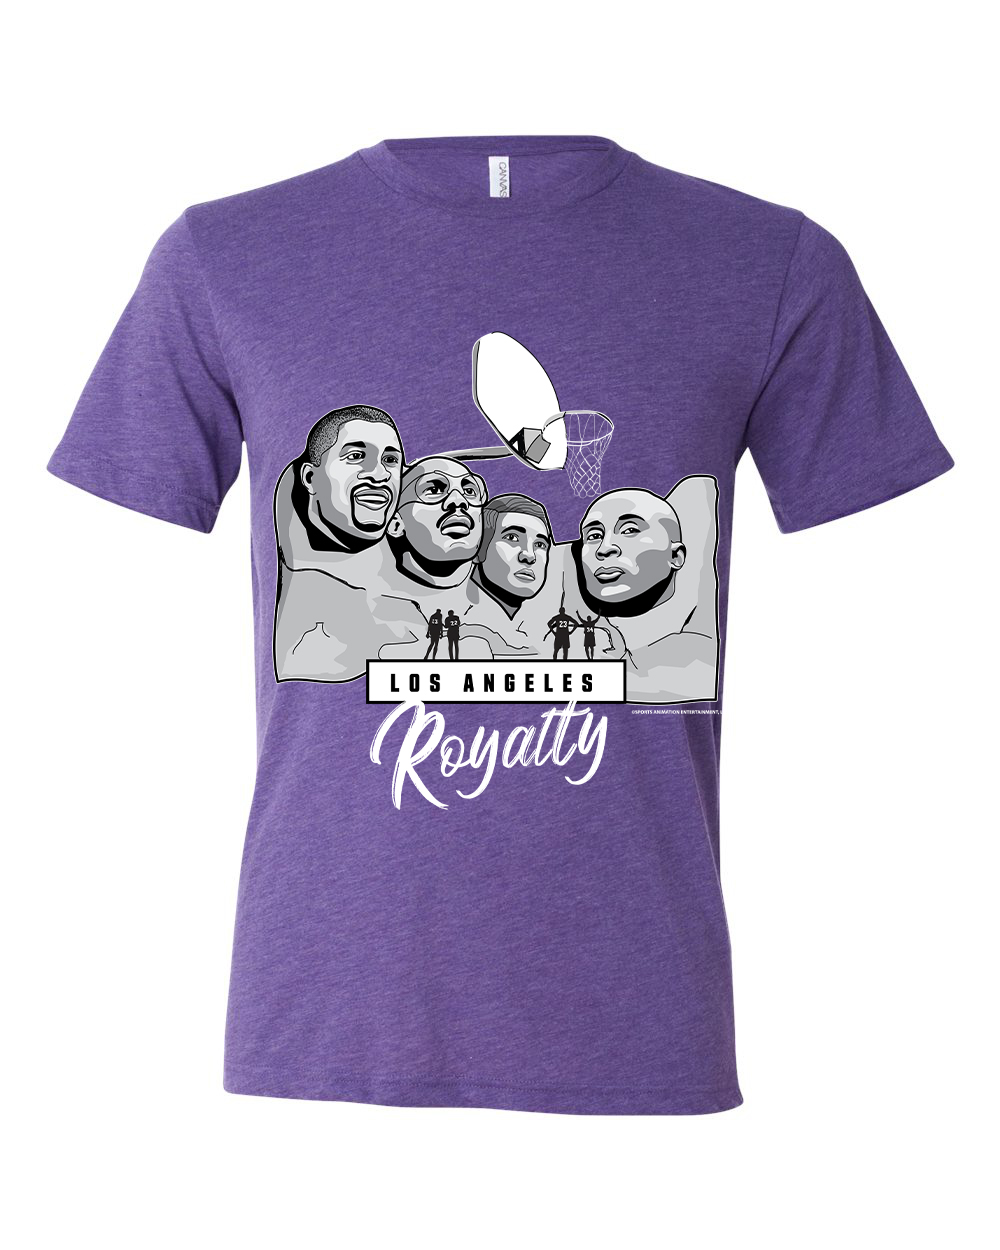 Mount Rushmore - Basketball Los Angeles Royalty (Purple)